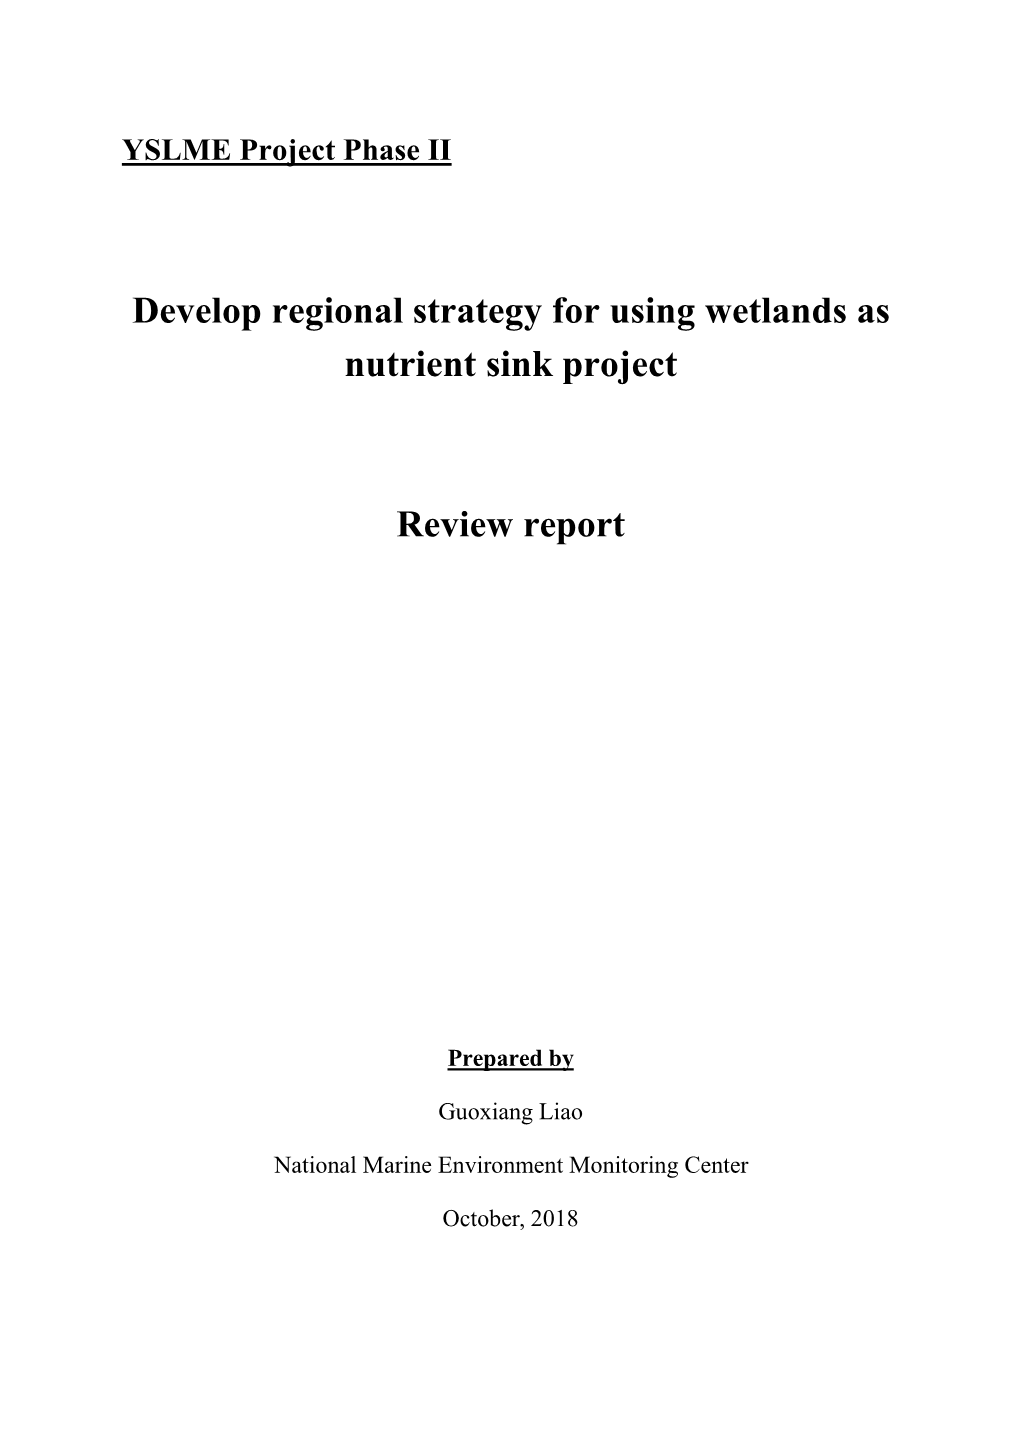 Develop Regional Strategy for Using Wetlands As Nutrient Sink Project